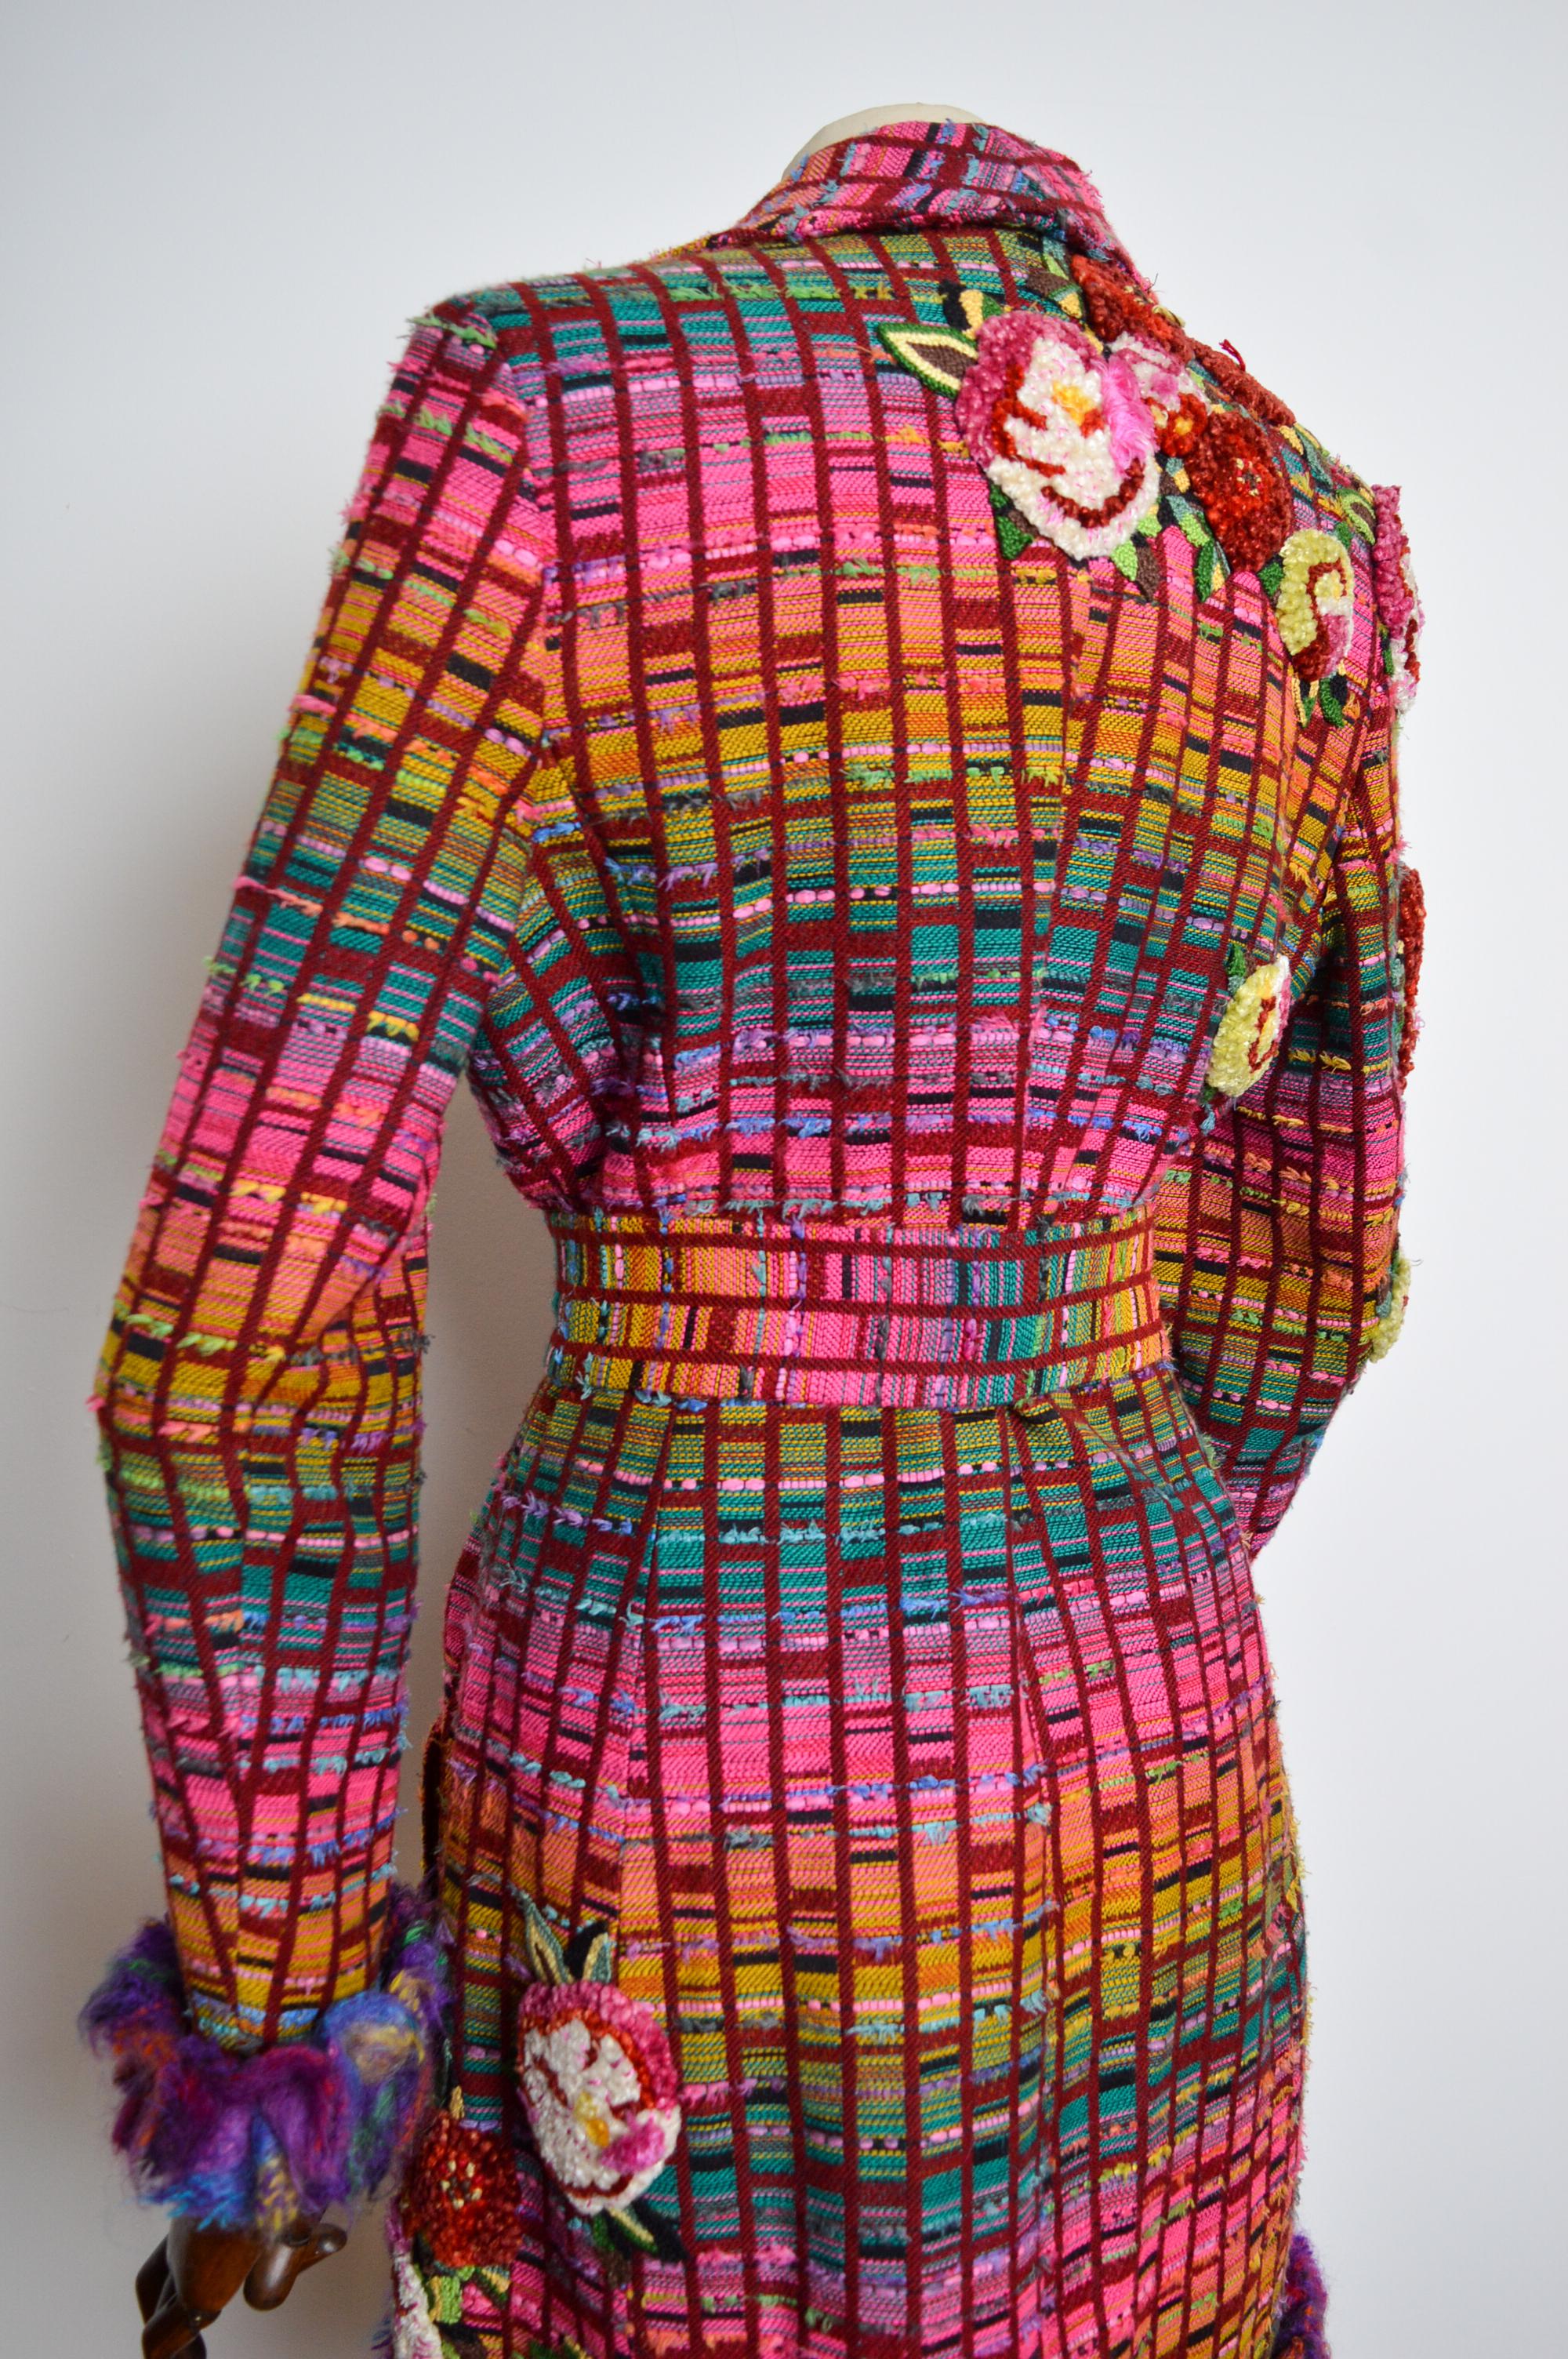 Superb Tweed Mathew Williamson Jewel Tone Embroidered Embellished Coat 11